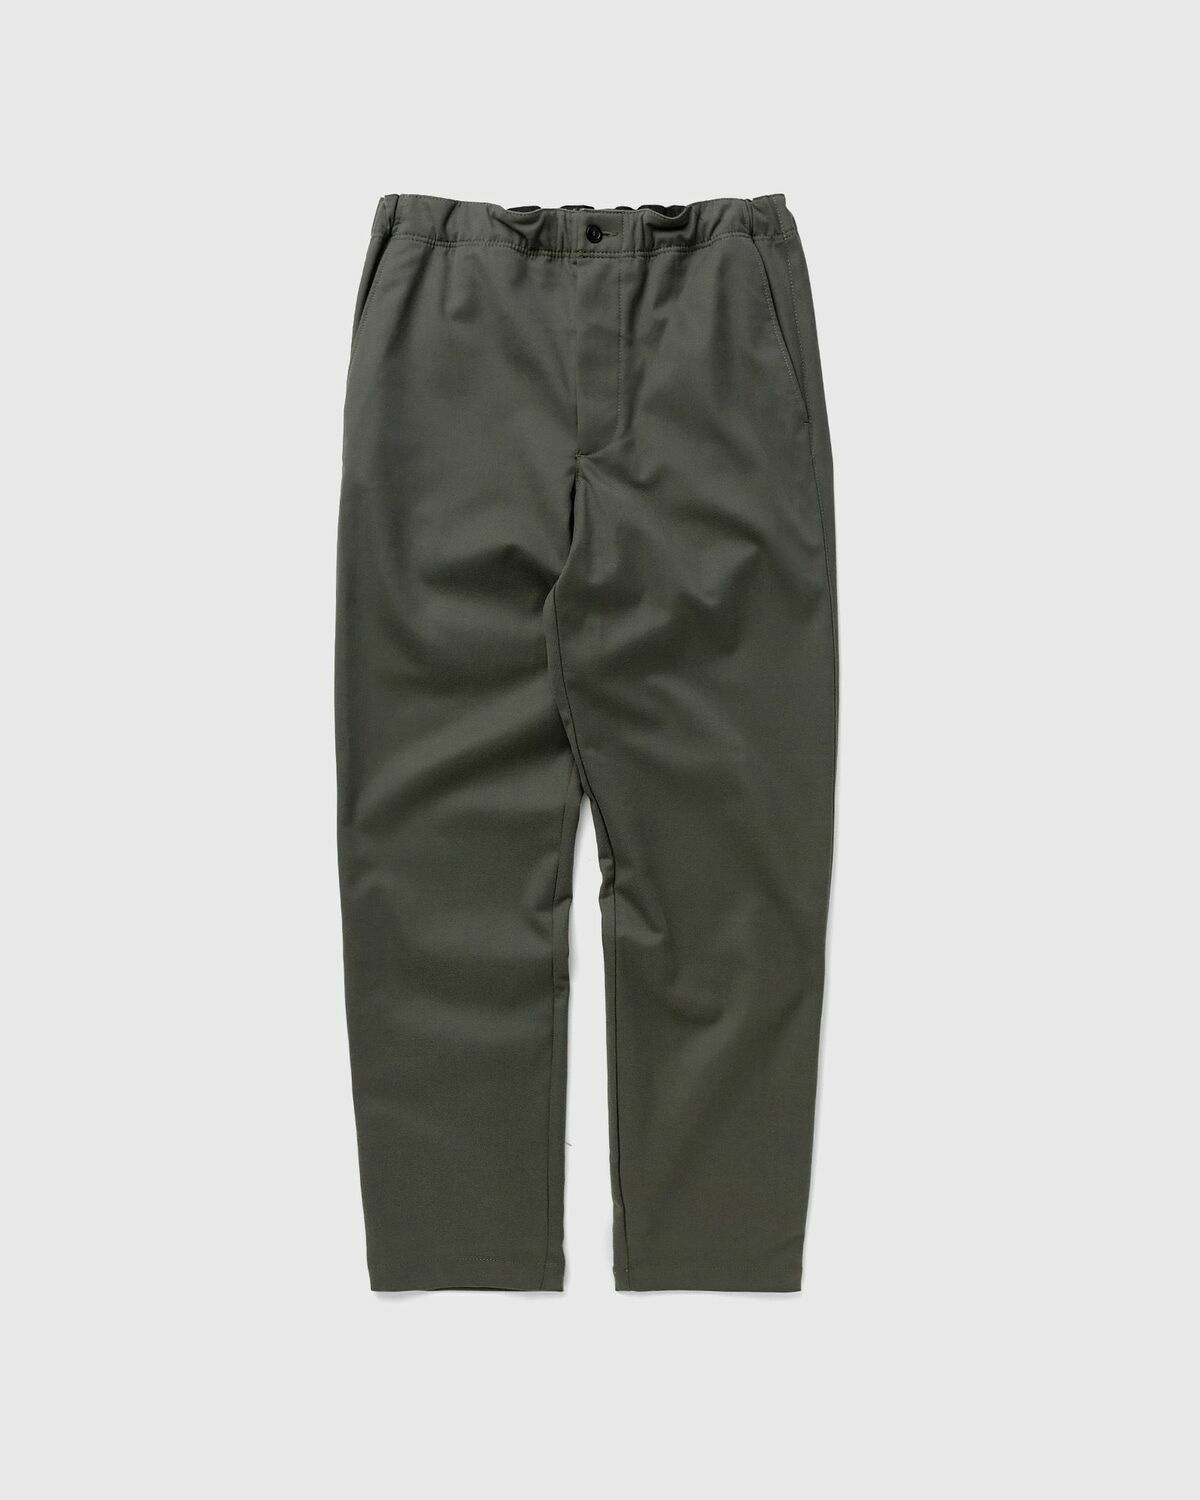 Summer Mens Casual Pants Trouser Slim Fit Work Elastic Waist Thin Sport  Trousers | eBay